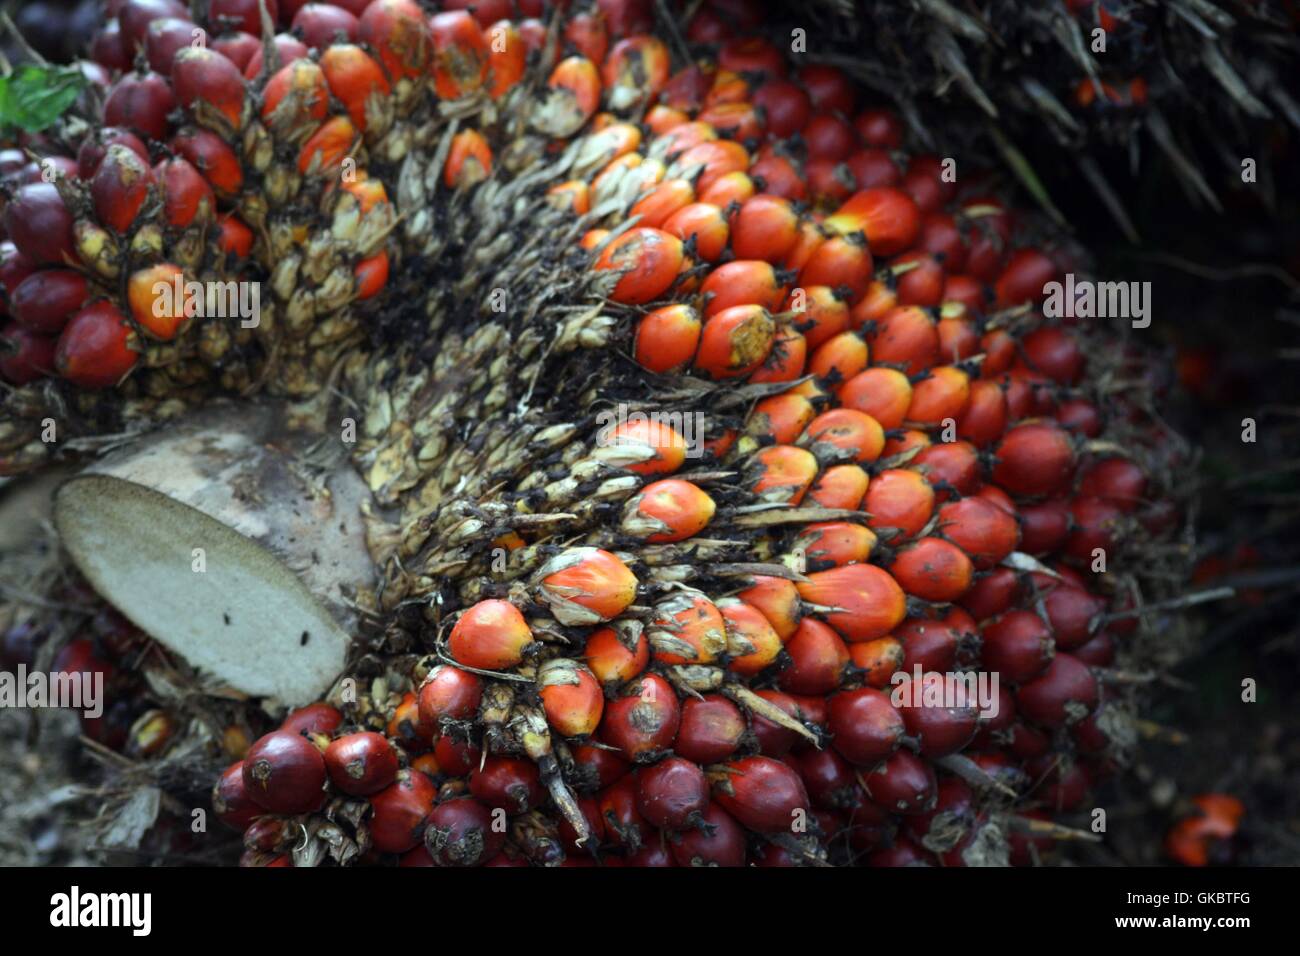 A palm fruit in Bintan island, Indonesia. Photo by Yuli Seperi/Alamy Stock Photo